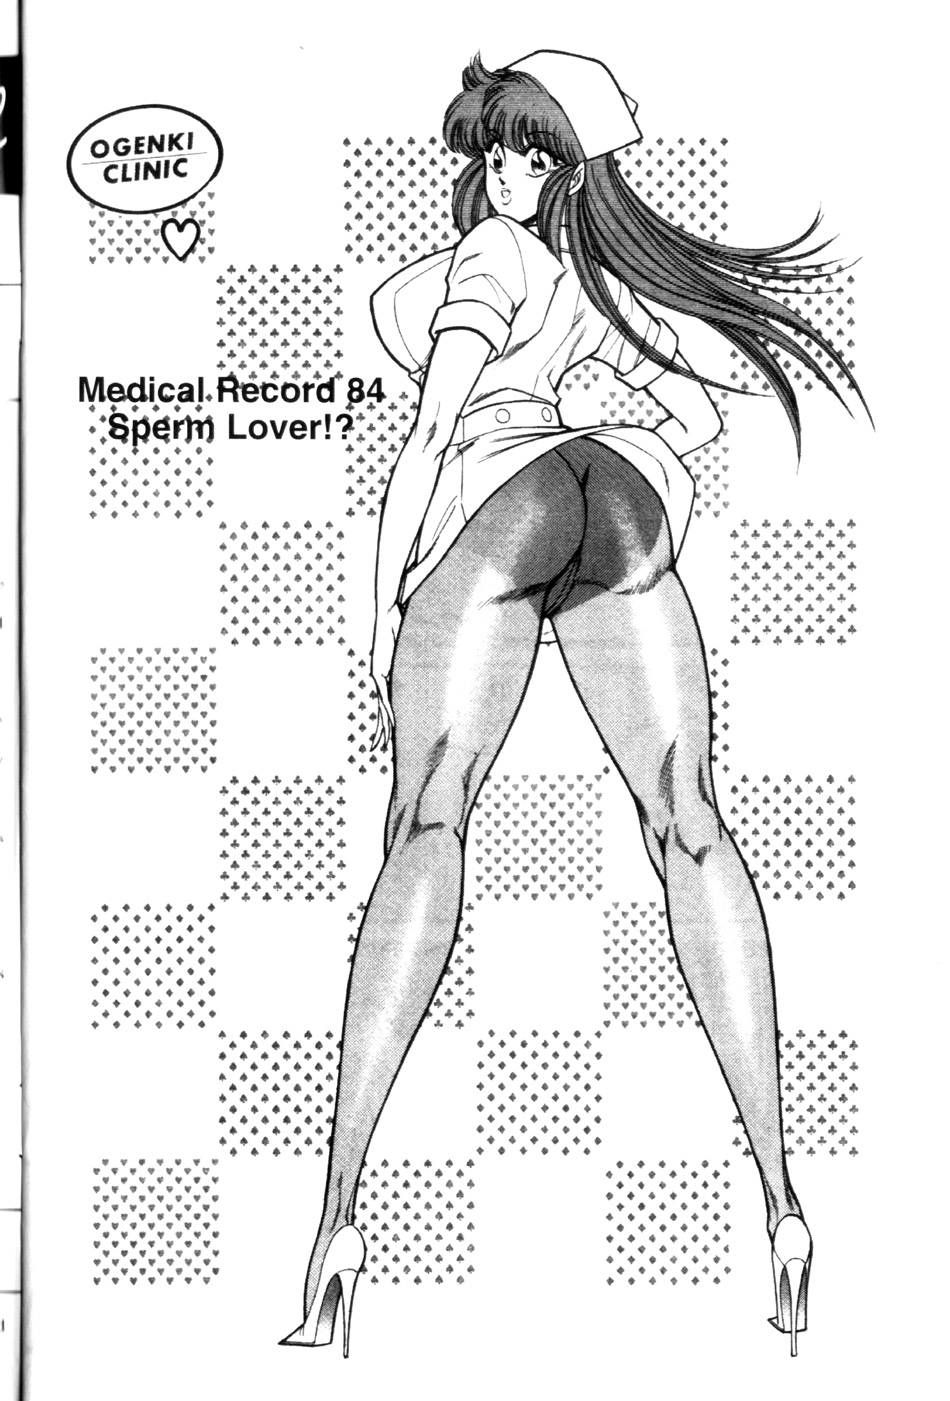 Ogenki Clinic Vol.6 120 hentai manga